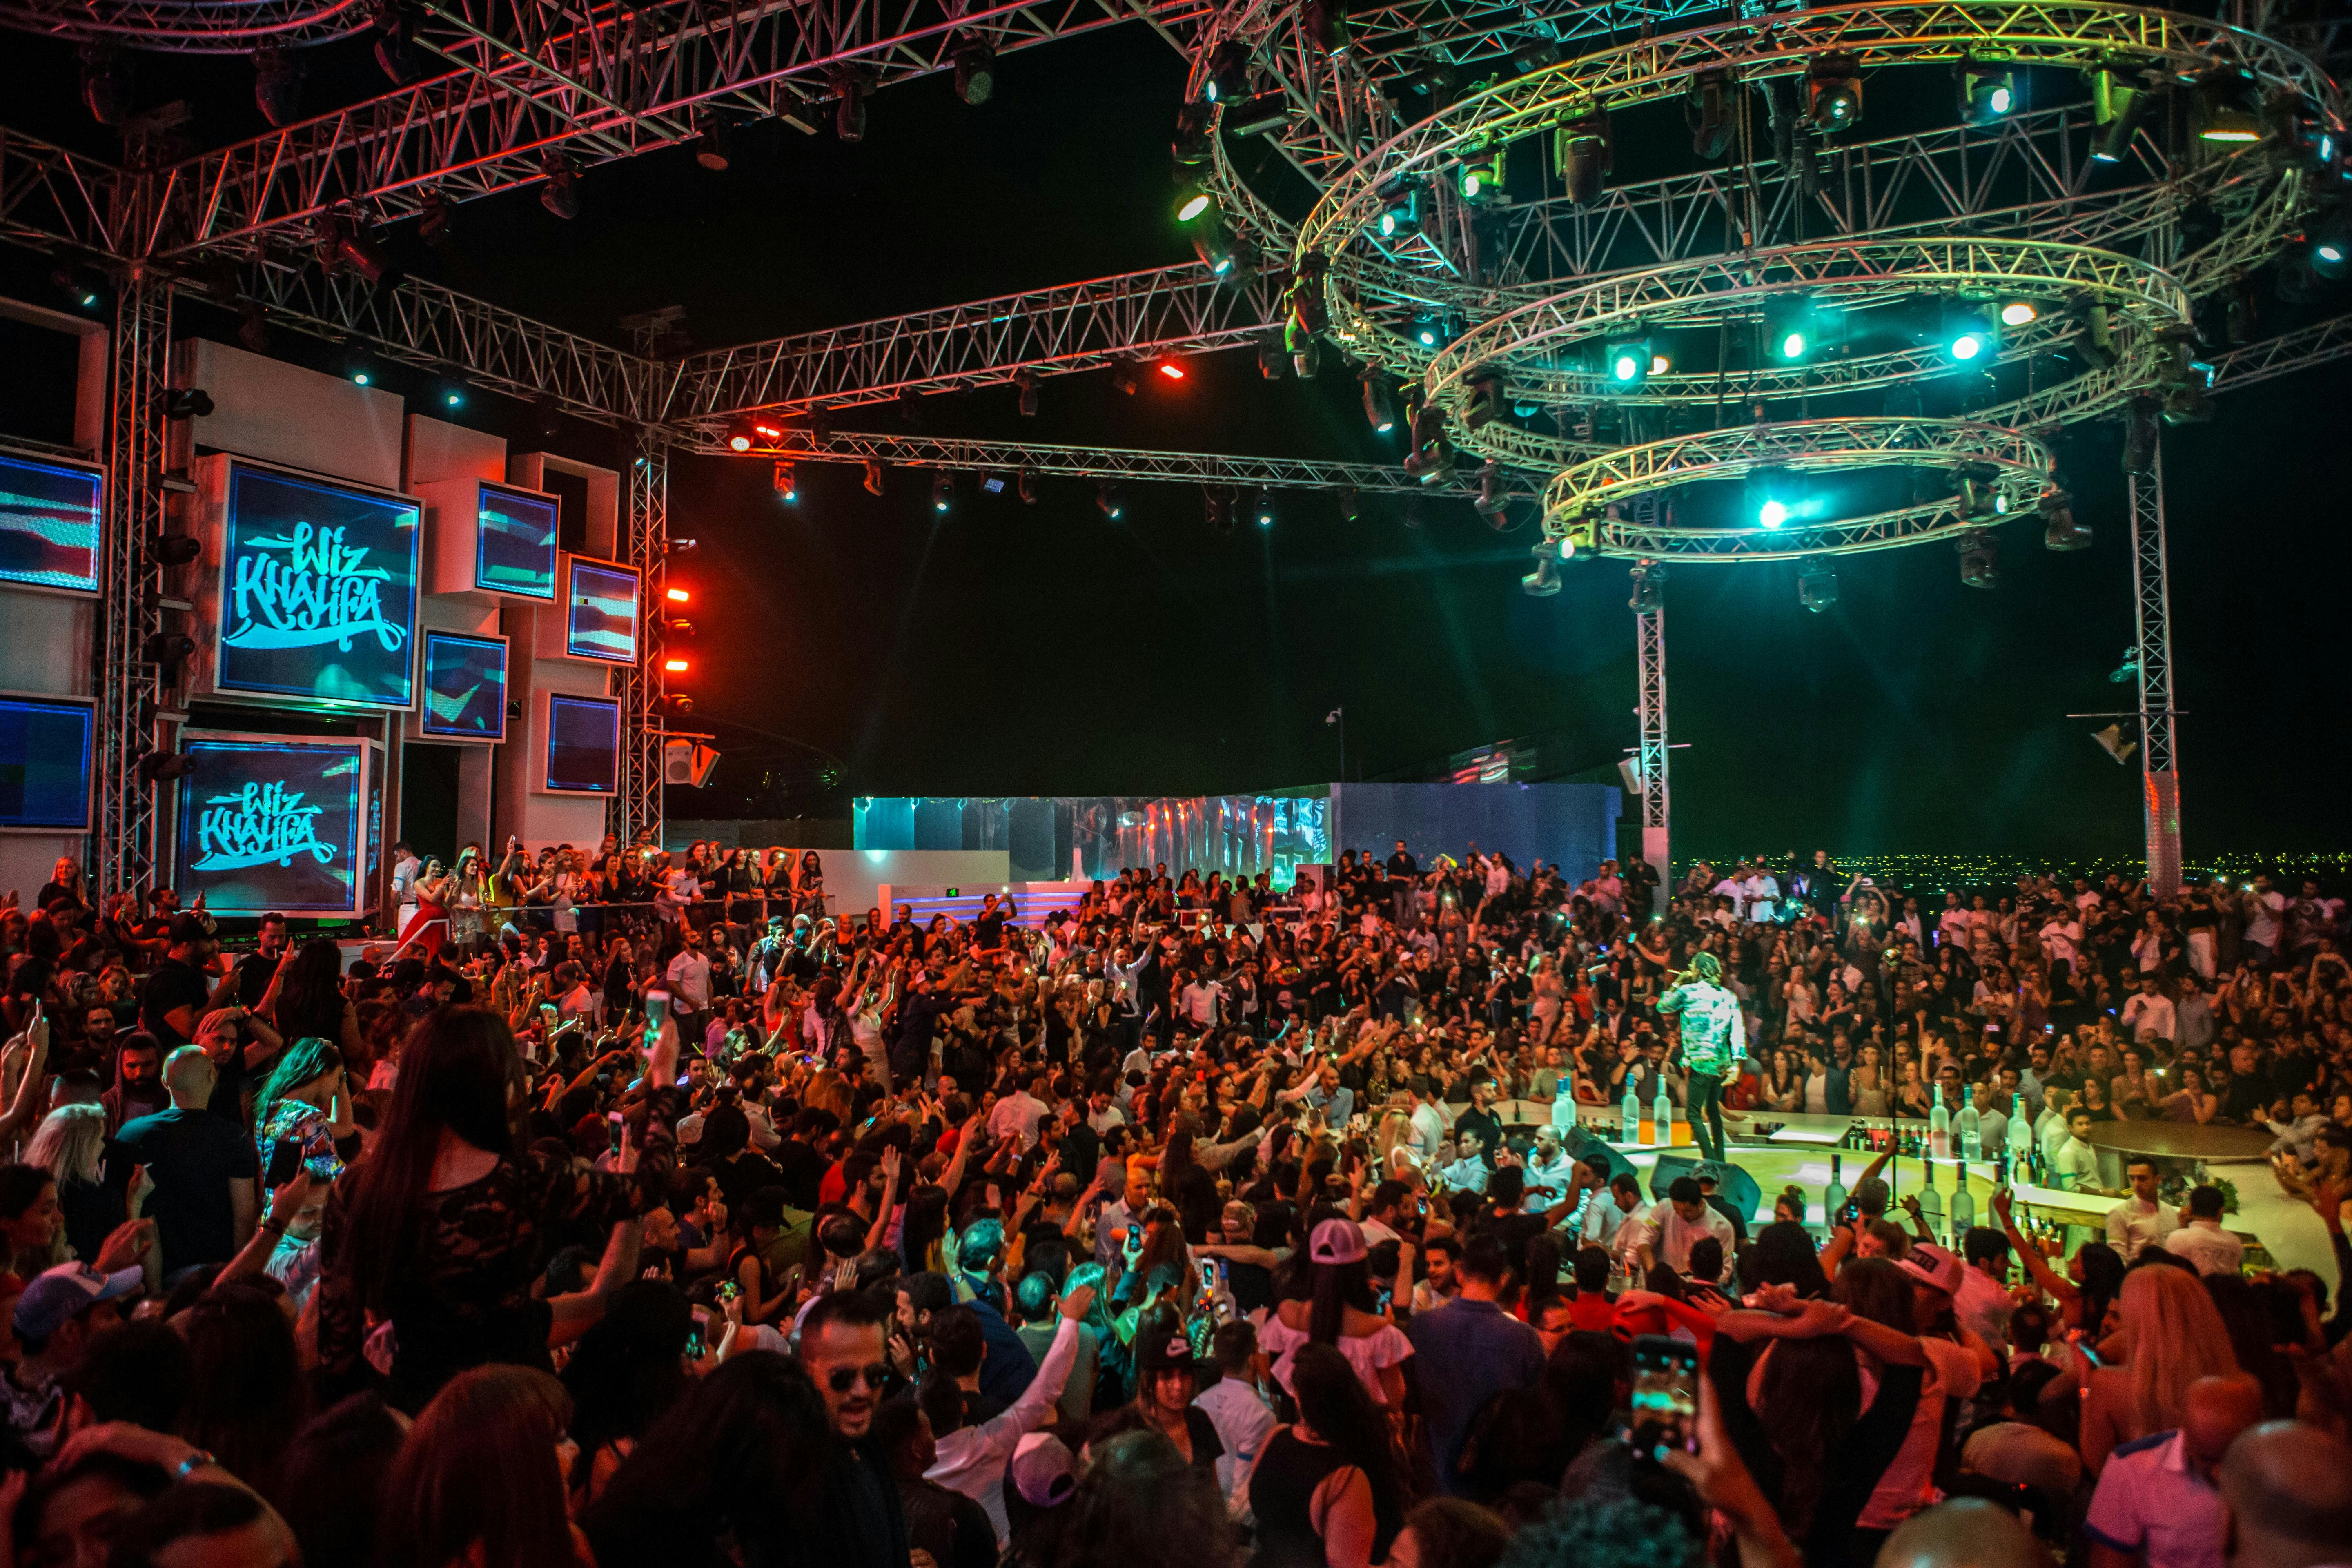 Wiz Khalifa Performs At White Club Dubai on March 31, 2016 in Dubai, United Arab Emirates.